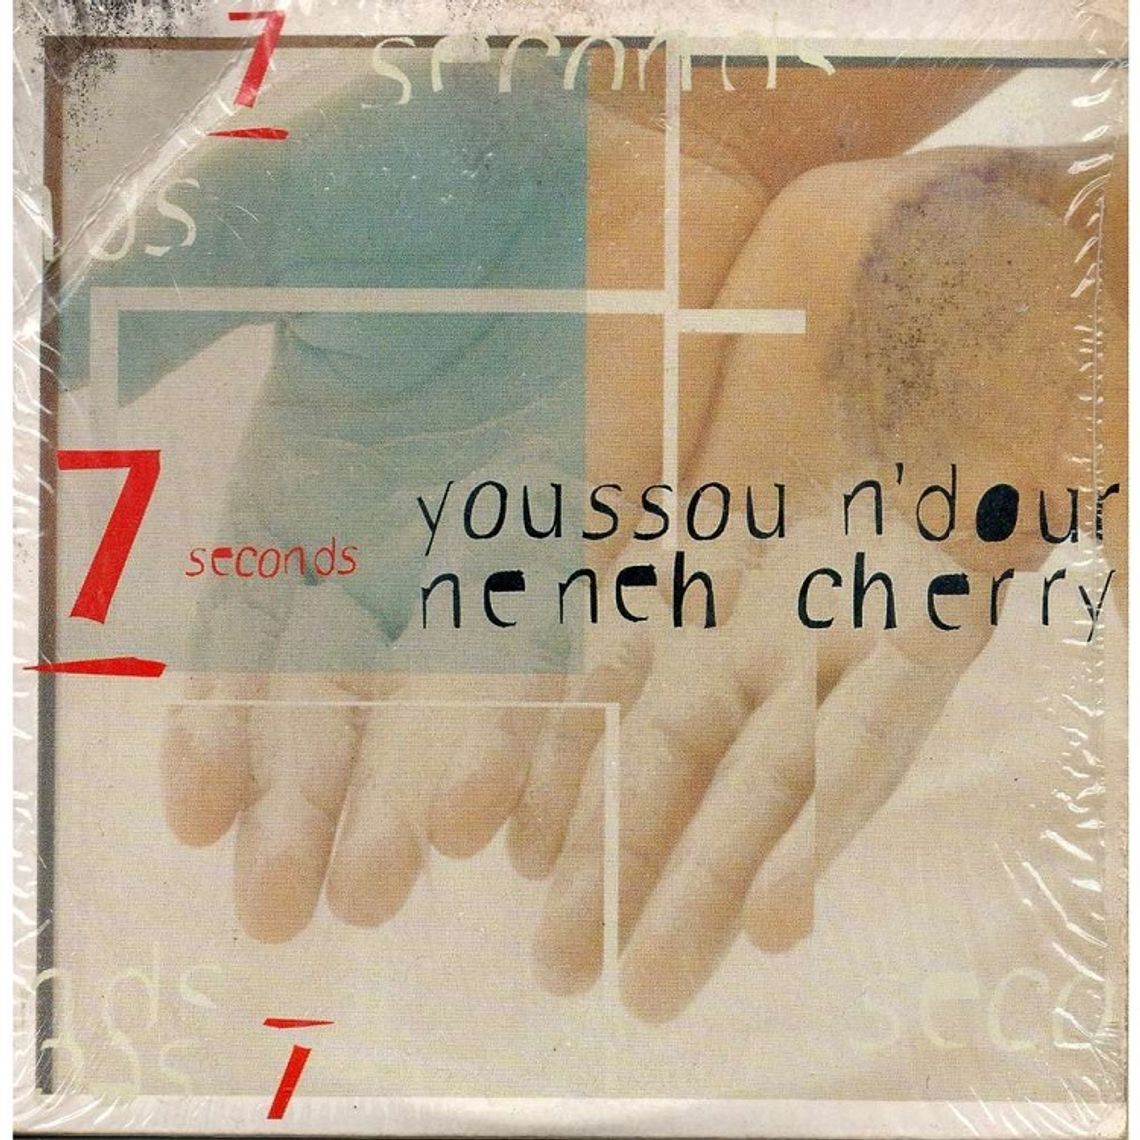 Youssou N'Dour & Neneh Cherry "7 seconds"